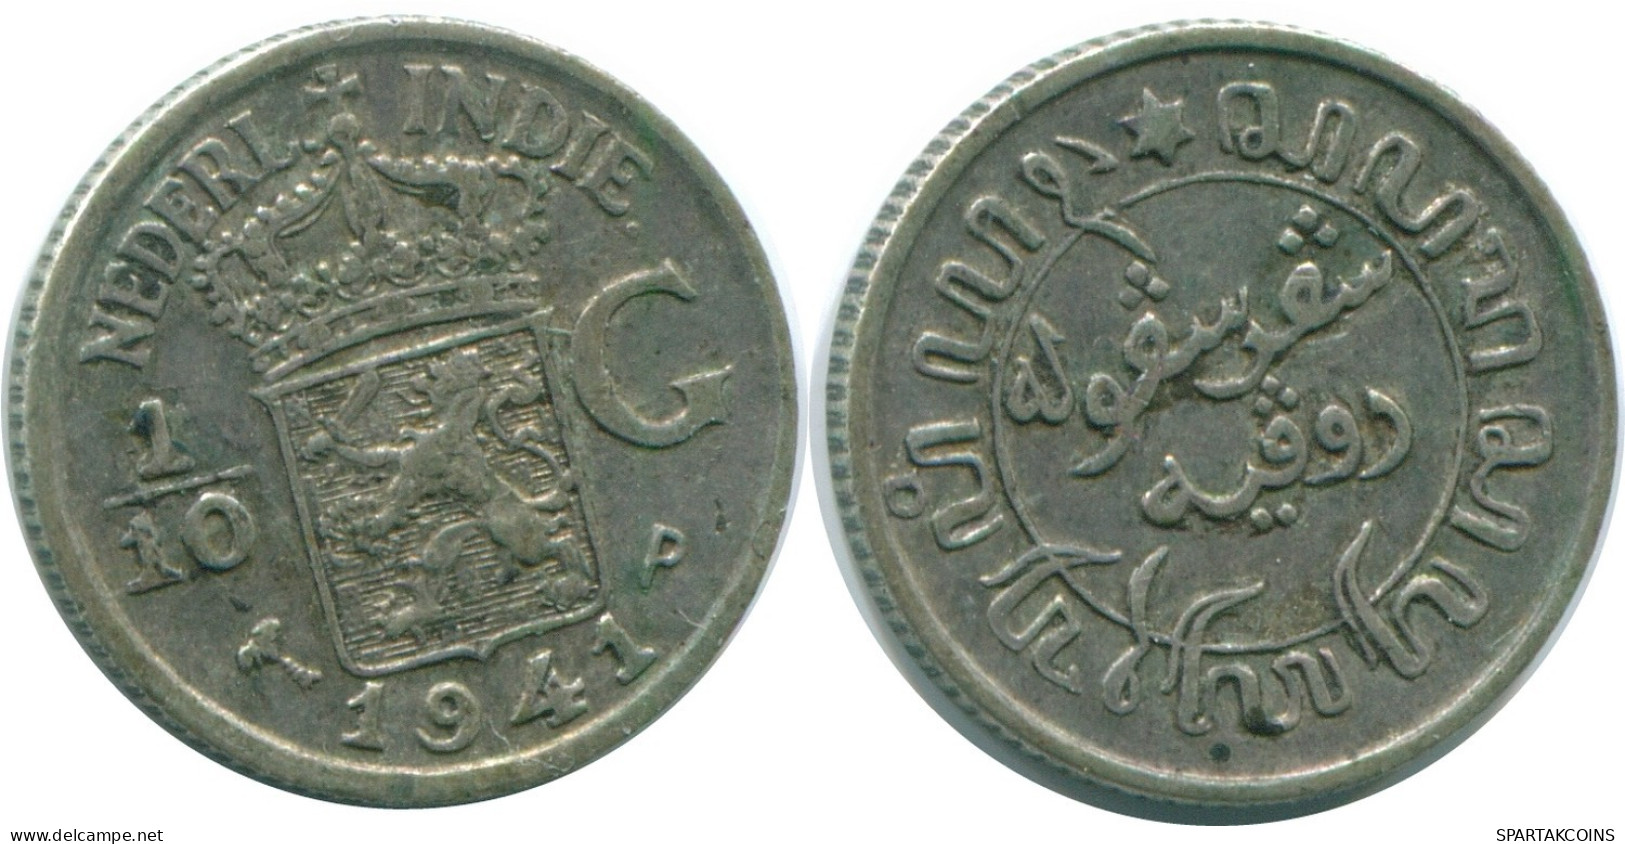 1/10 GULDEN 1941 P NETHERLANDS EAST INDIES SILVER Colonial Coin #NL13819.3.U.A - Indes Néerlandaises